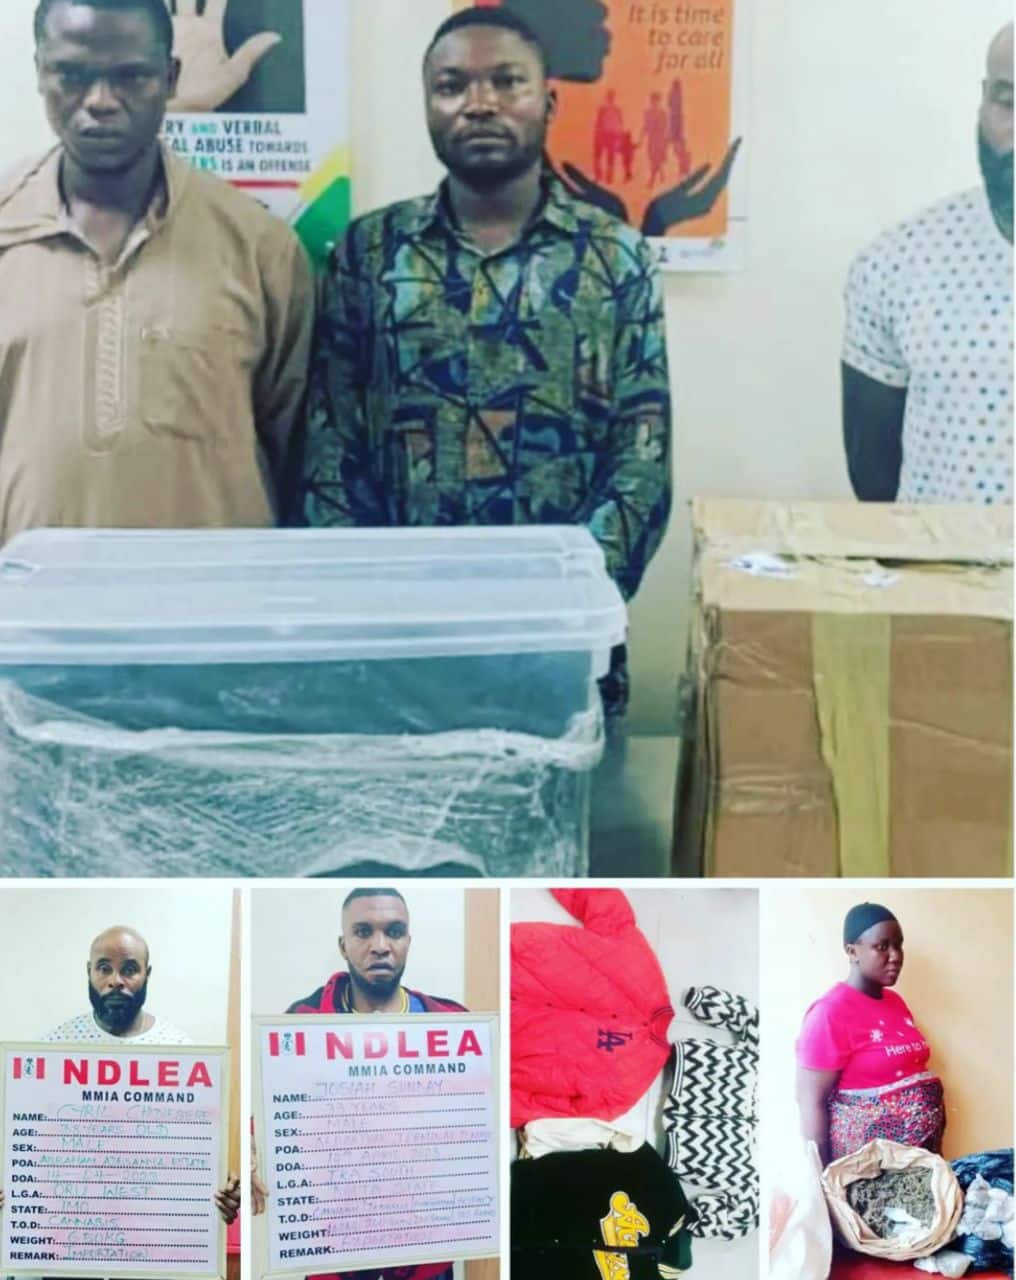 NDLEA arrest Lekki businessman over illicit drugs cargo from US